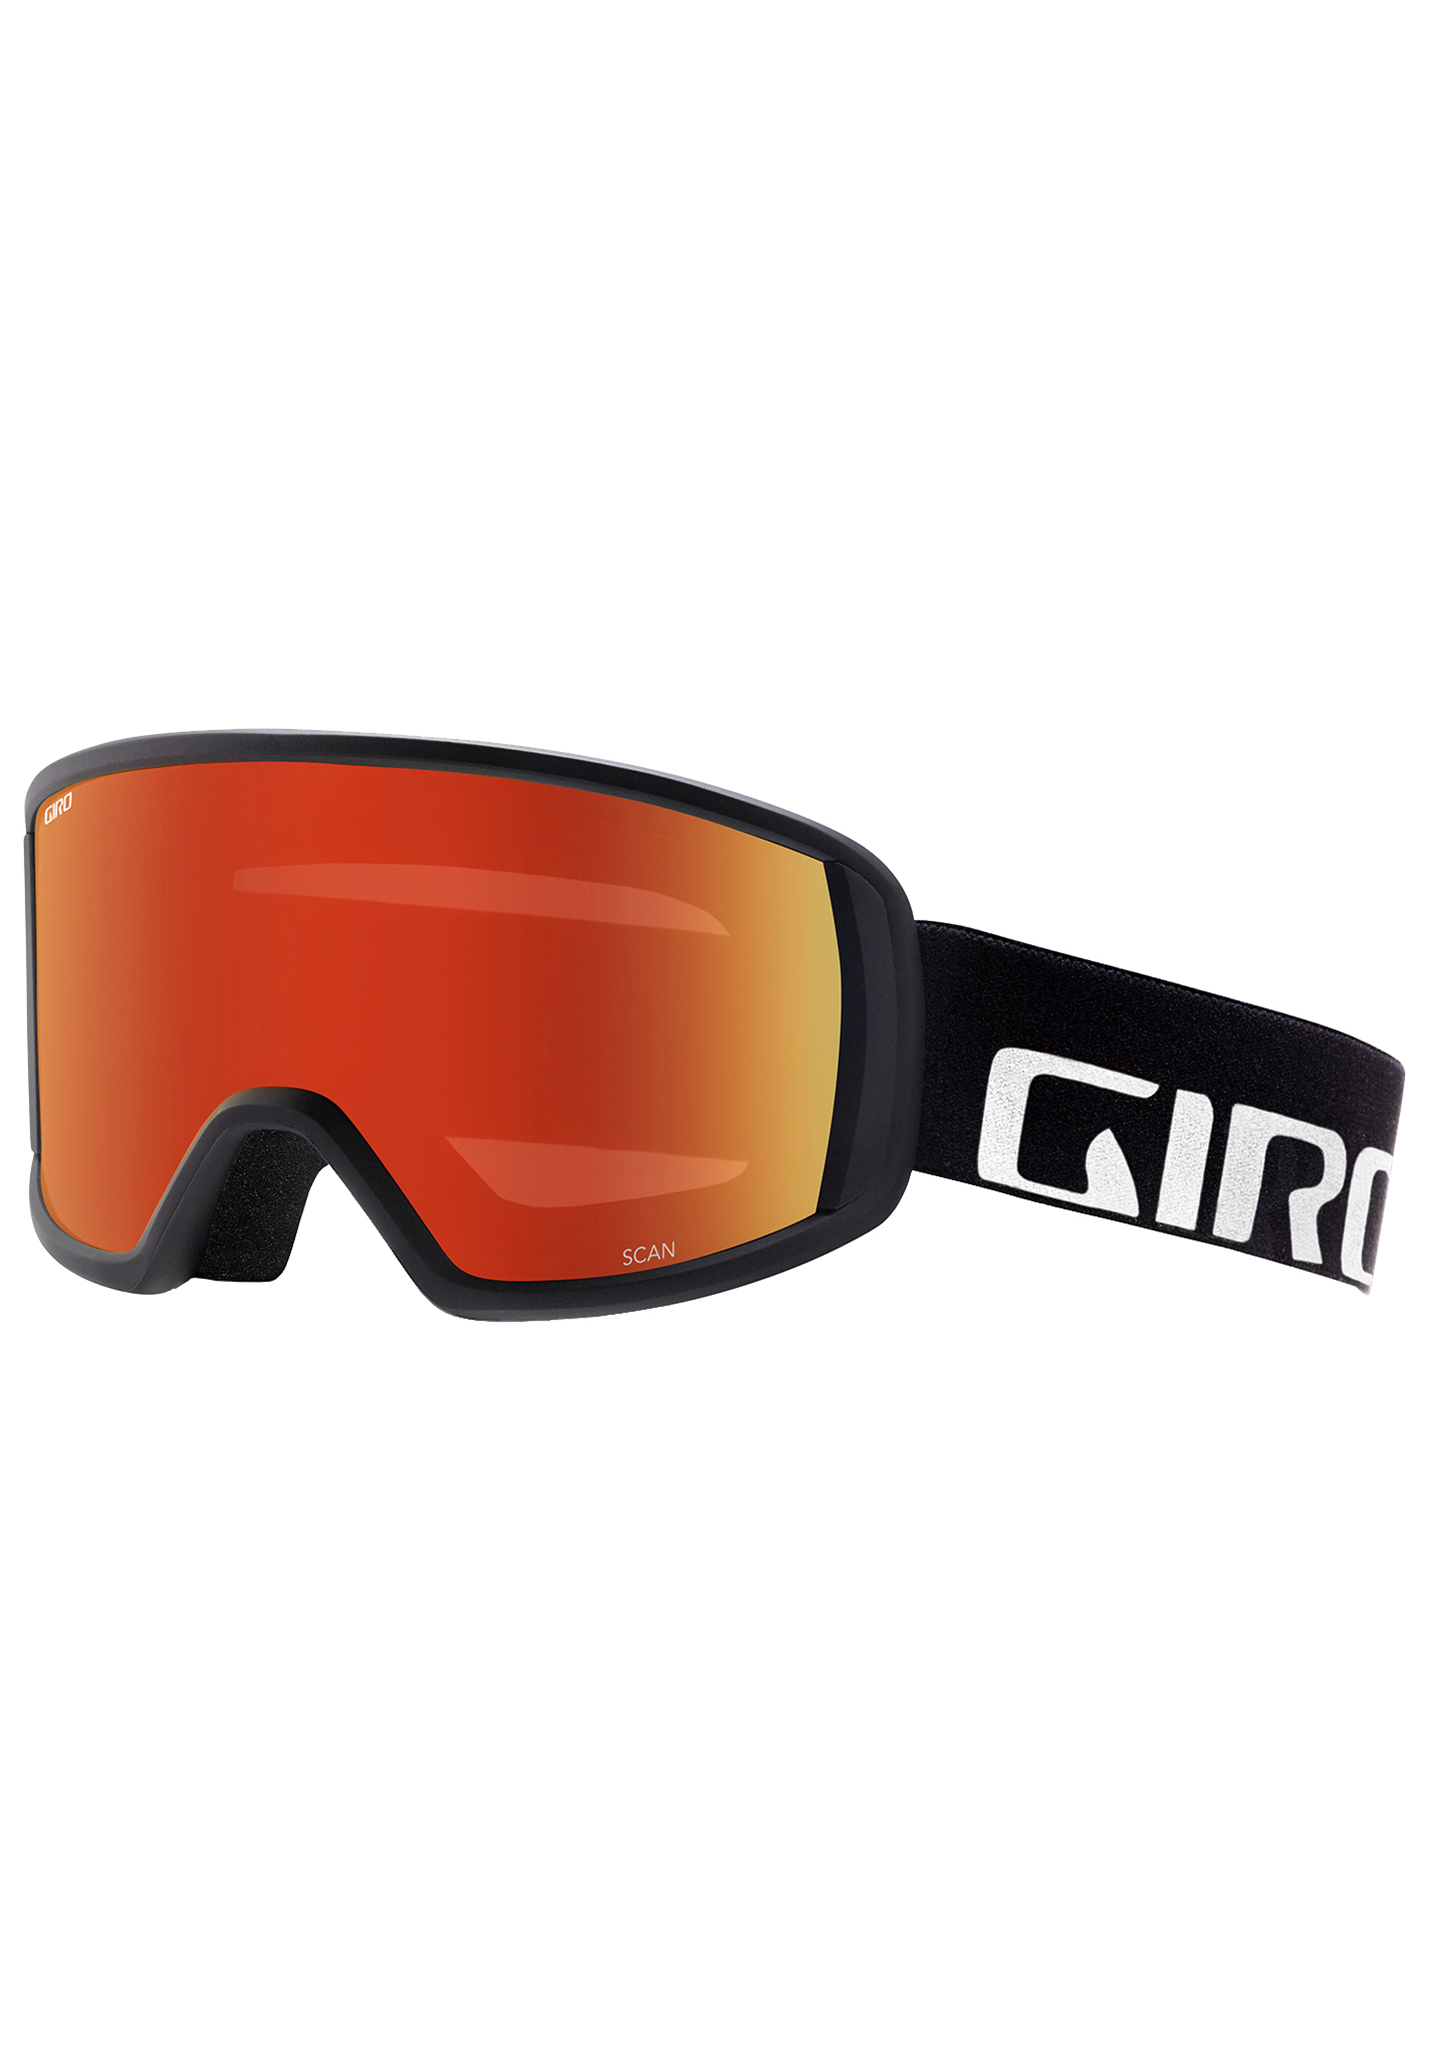 Giro Scan Snowboardbrillen schwarze wortmarke One Size